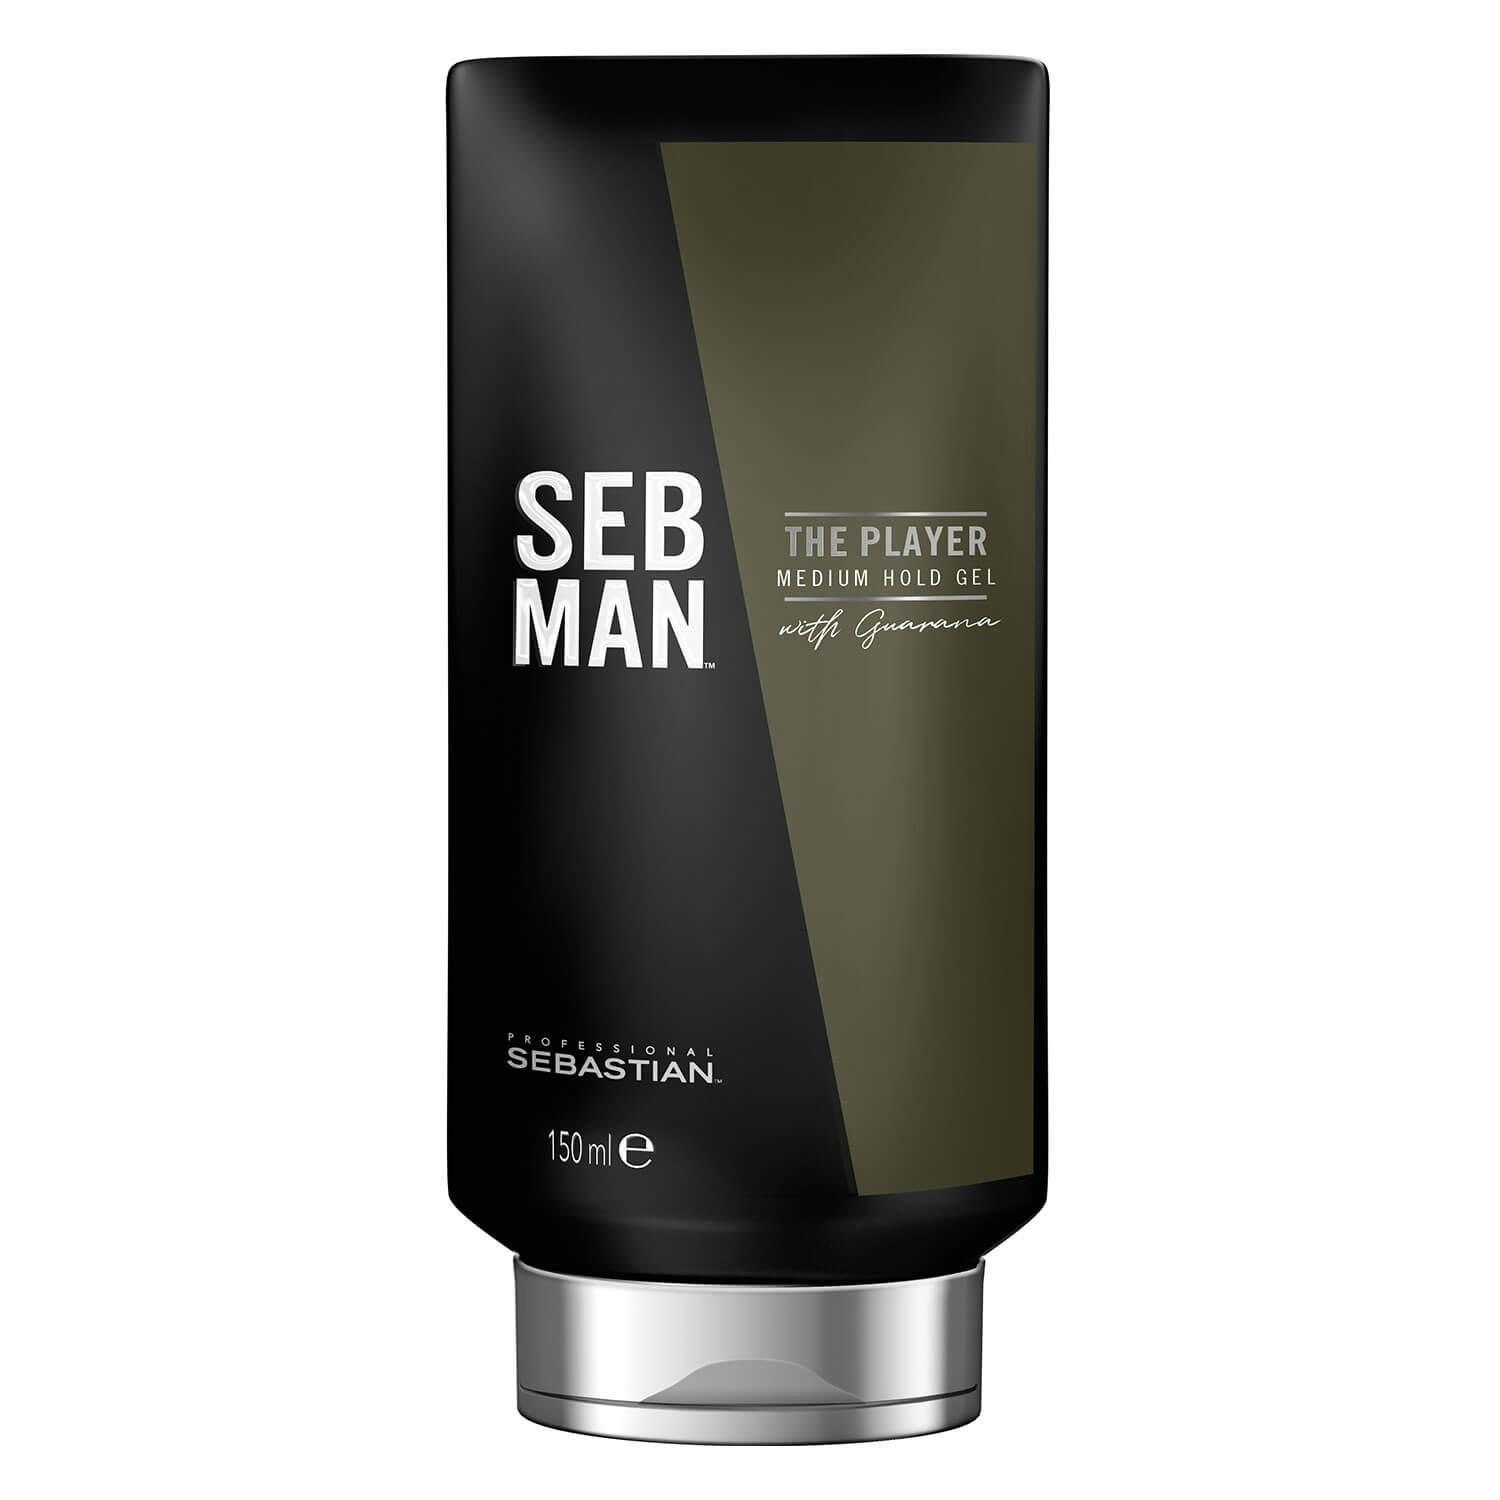 SEB MAN - The Player Medium Hold Gel